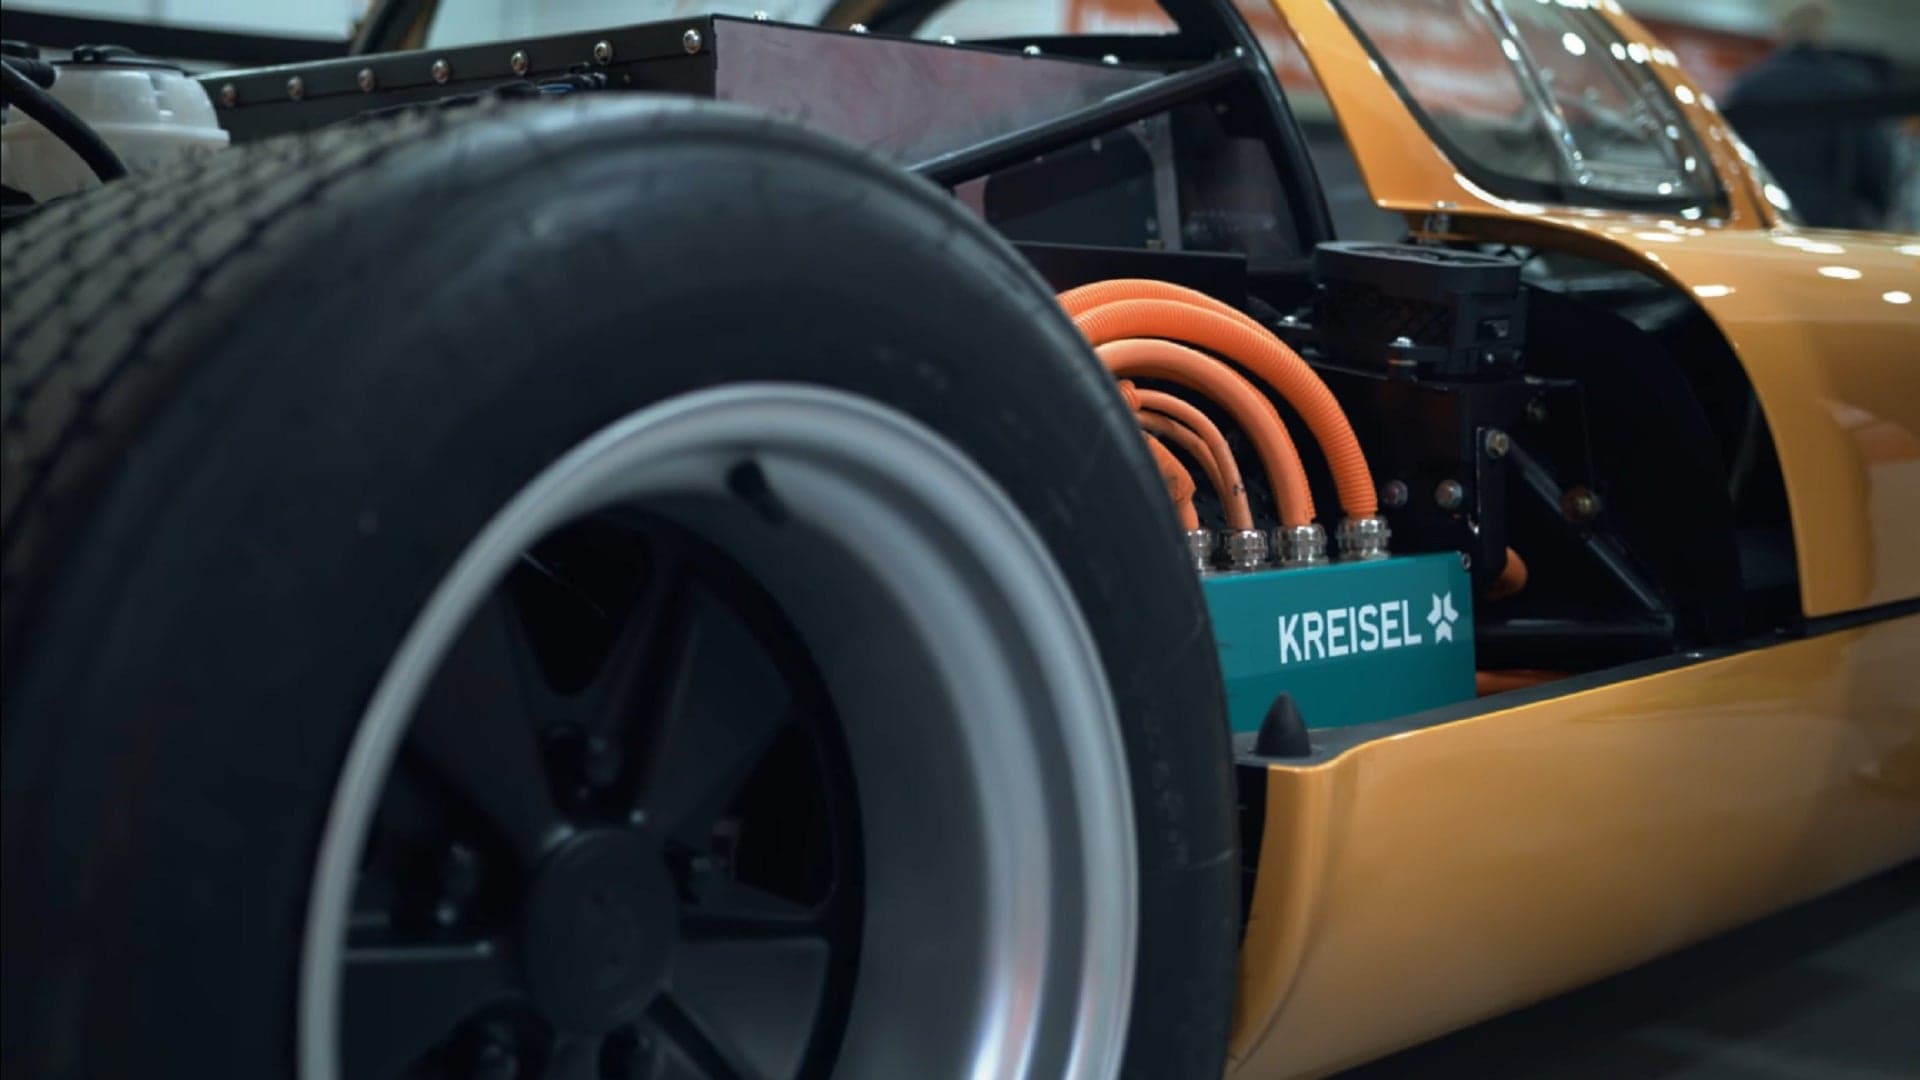 Kreisel Amps Up Fiberglass Porsche 910 Replica With Electric Power